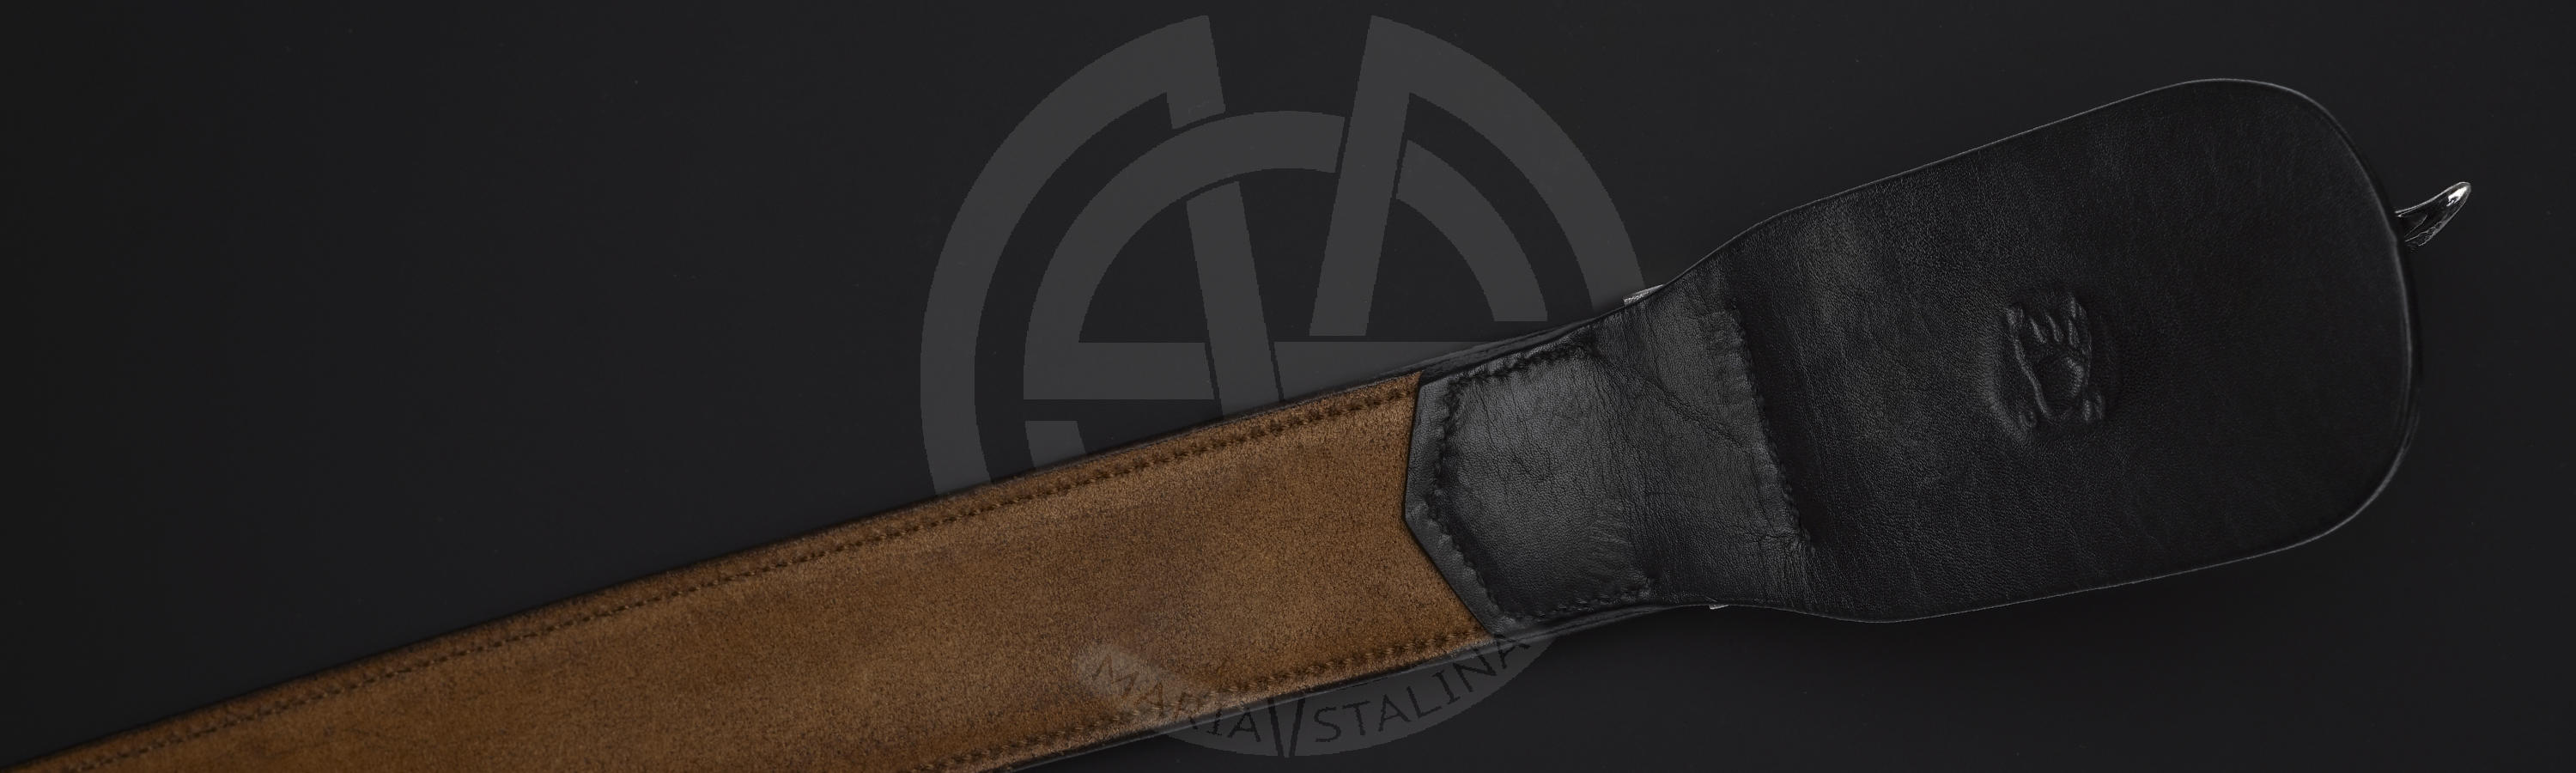 Custom leather belt